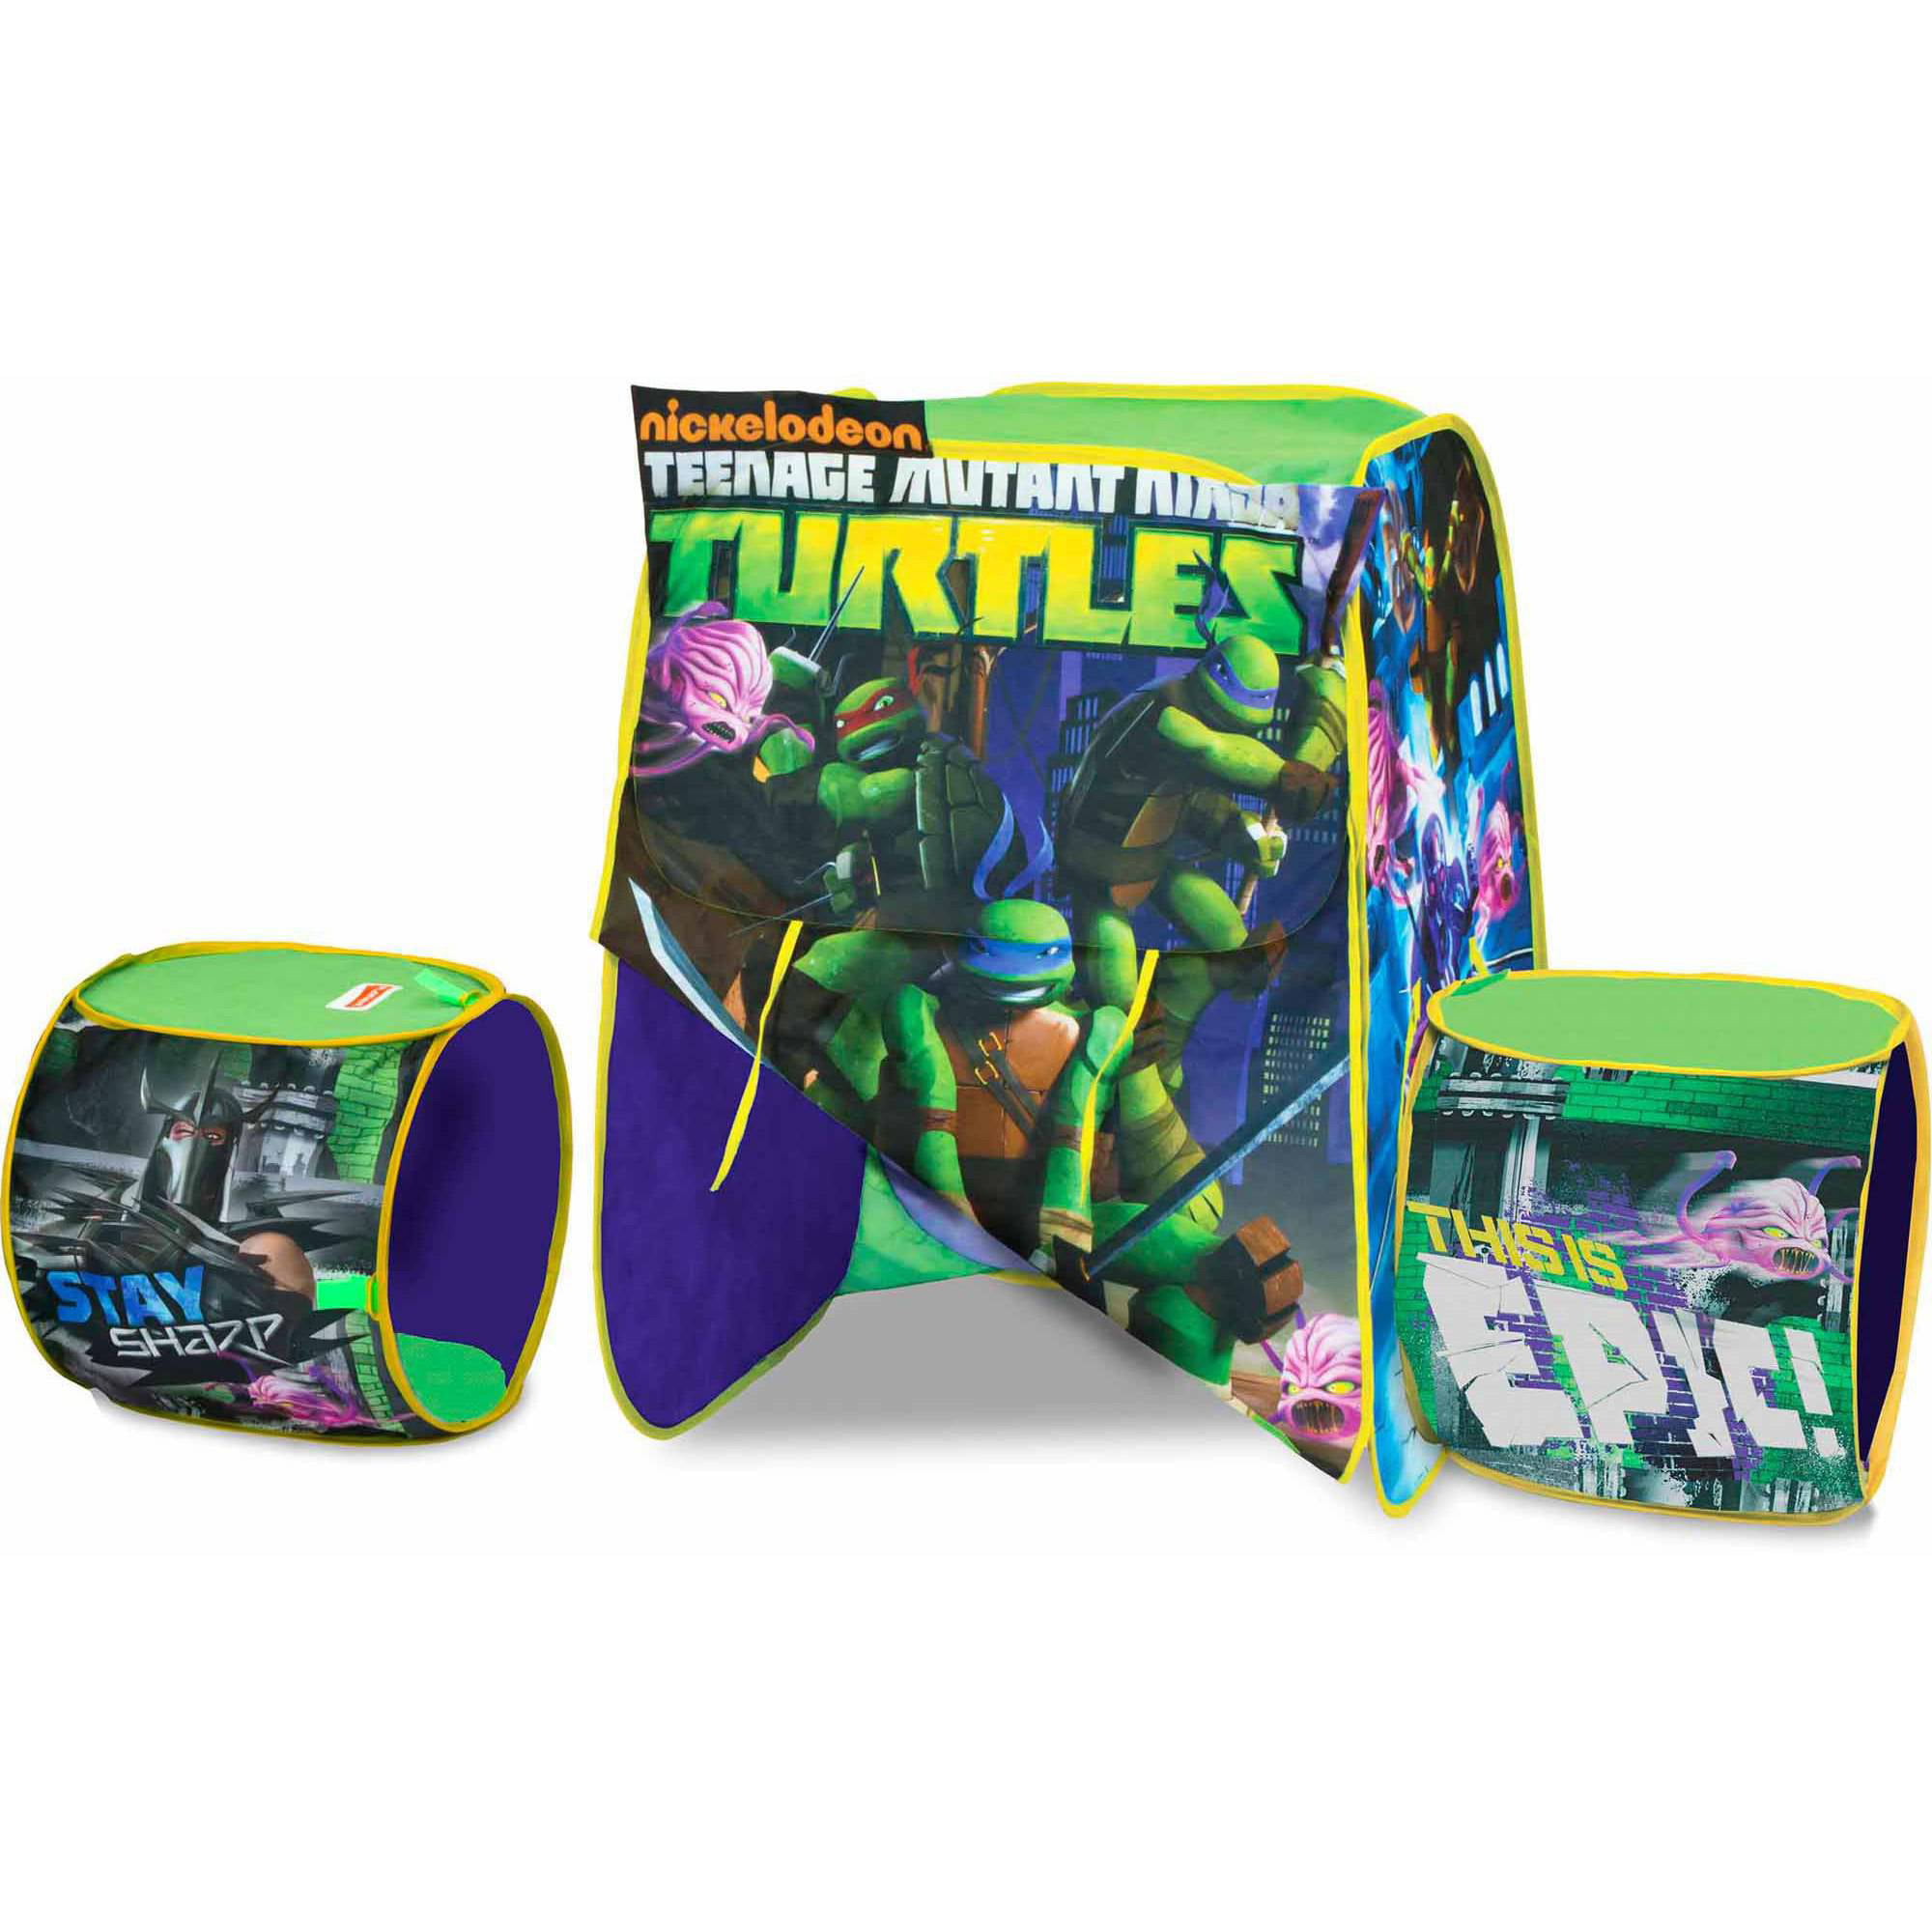 Nickelodeon Teenage Mutant Ninja Turtles Discovery Hut Tent and Tunnel